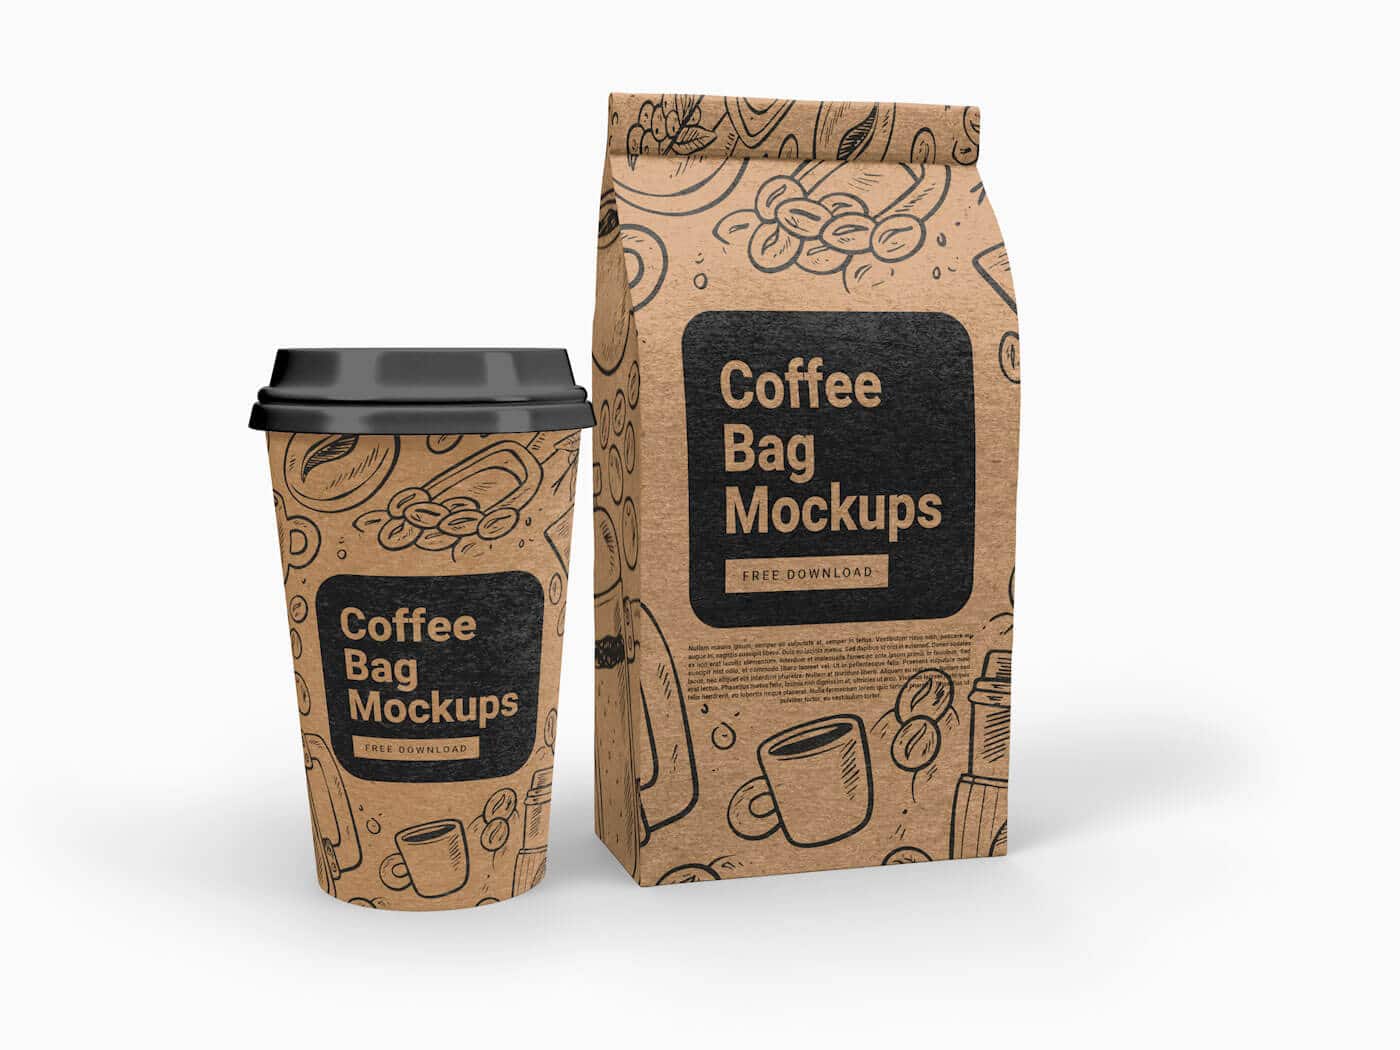  Cup and Coffee Bag Free Mockups 